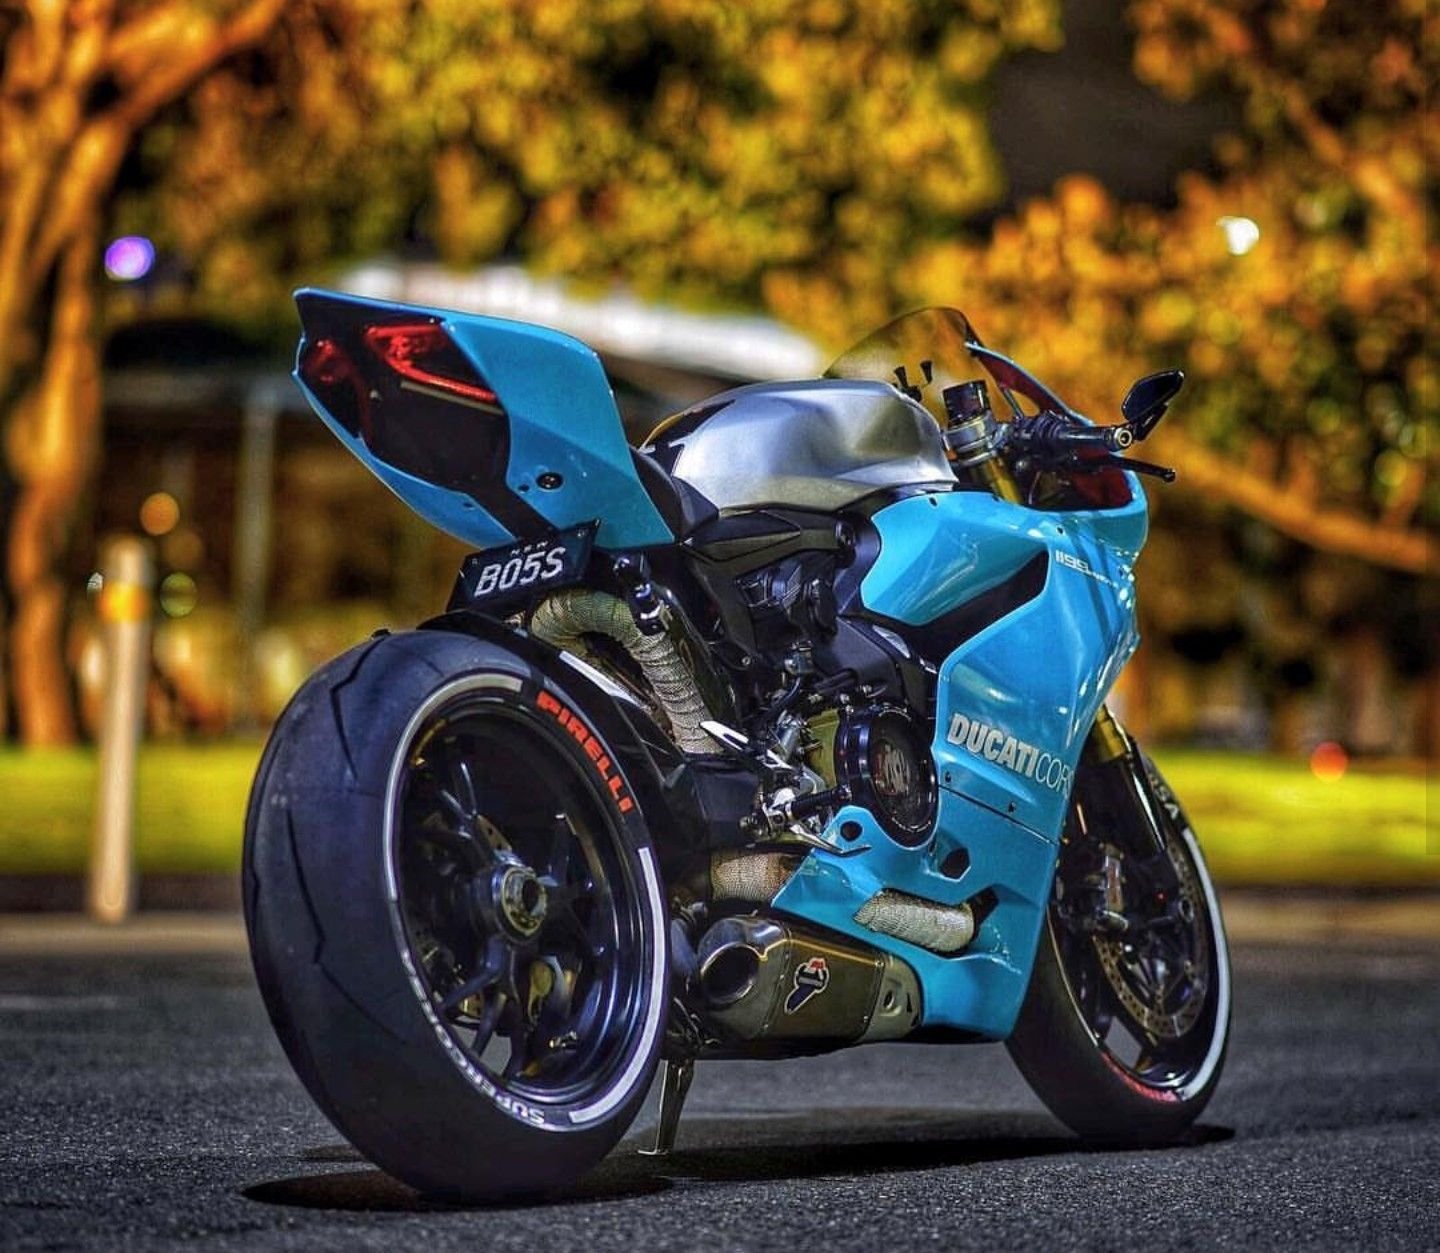 Фото мотоциклов спортивных. Спортивный мотоцикл Дукати. Дукати мотоцикл синий. Мотоцикл Дукати спорт. Дукати Панигале синий.